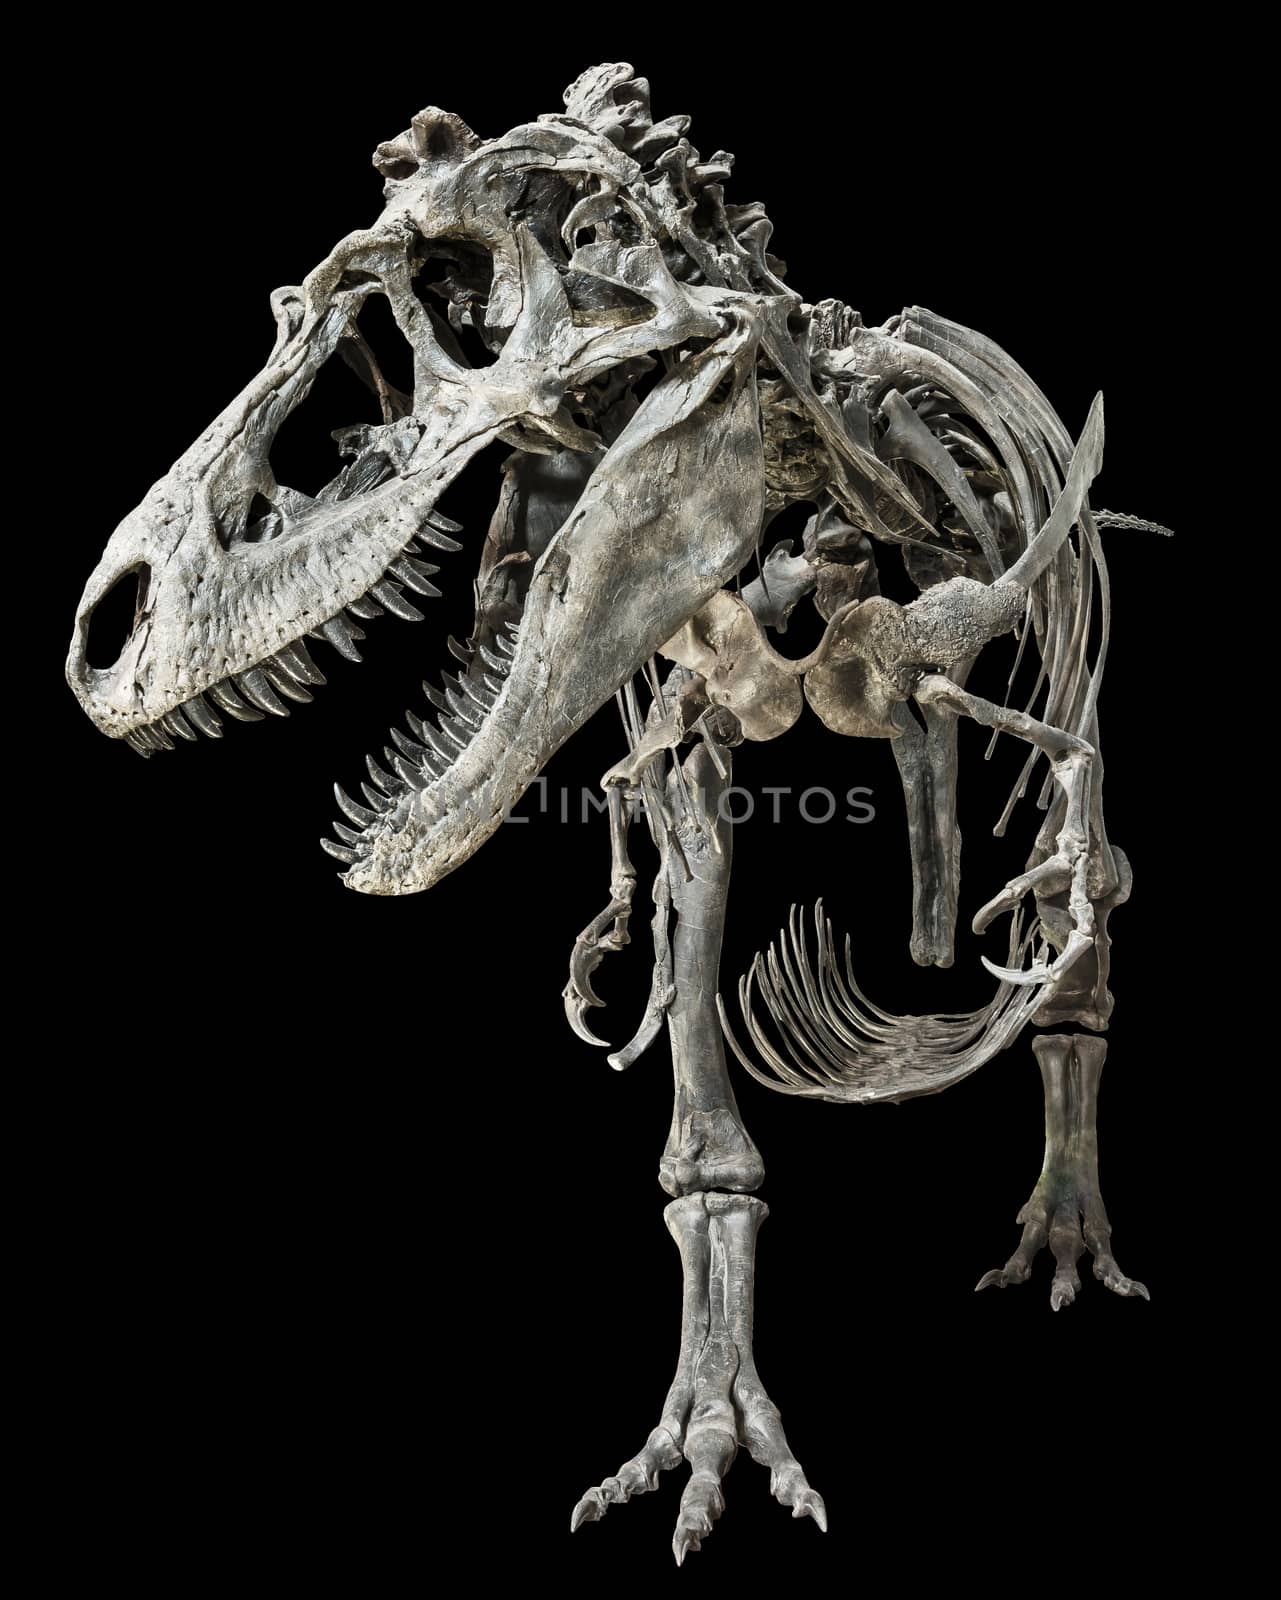 Tyrannosaurus Rex skeleton on isolated background .